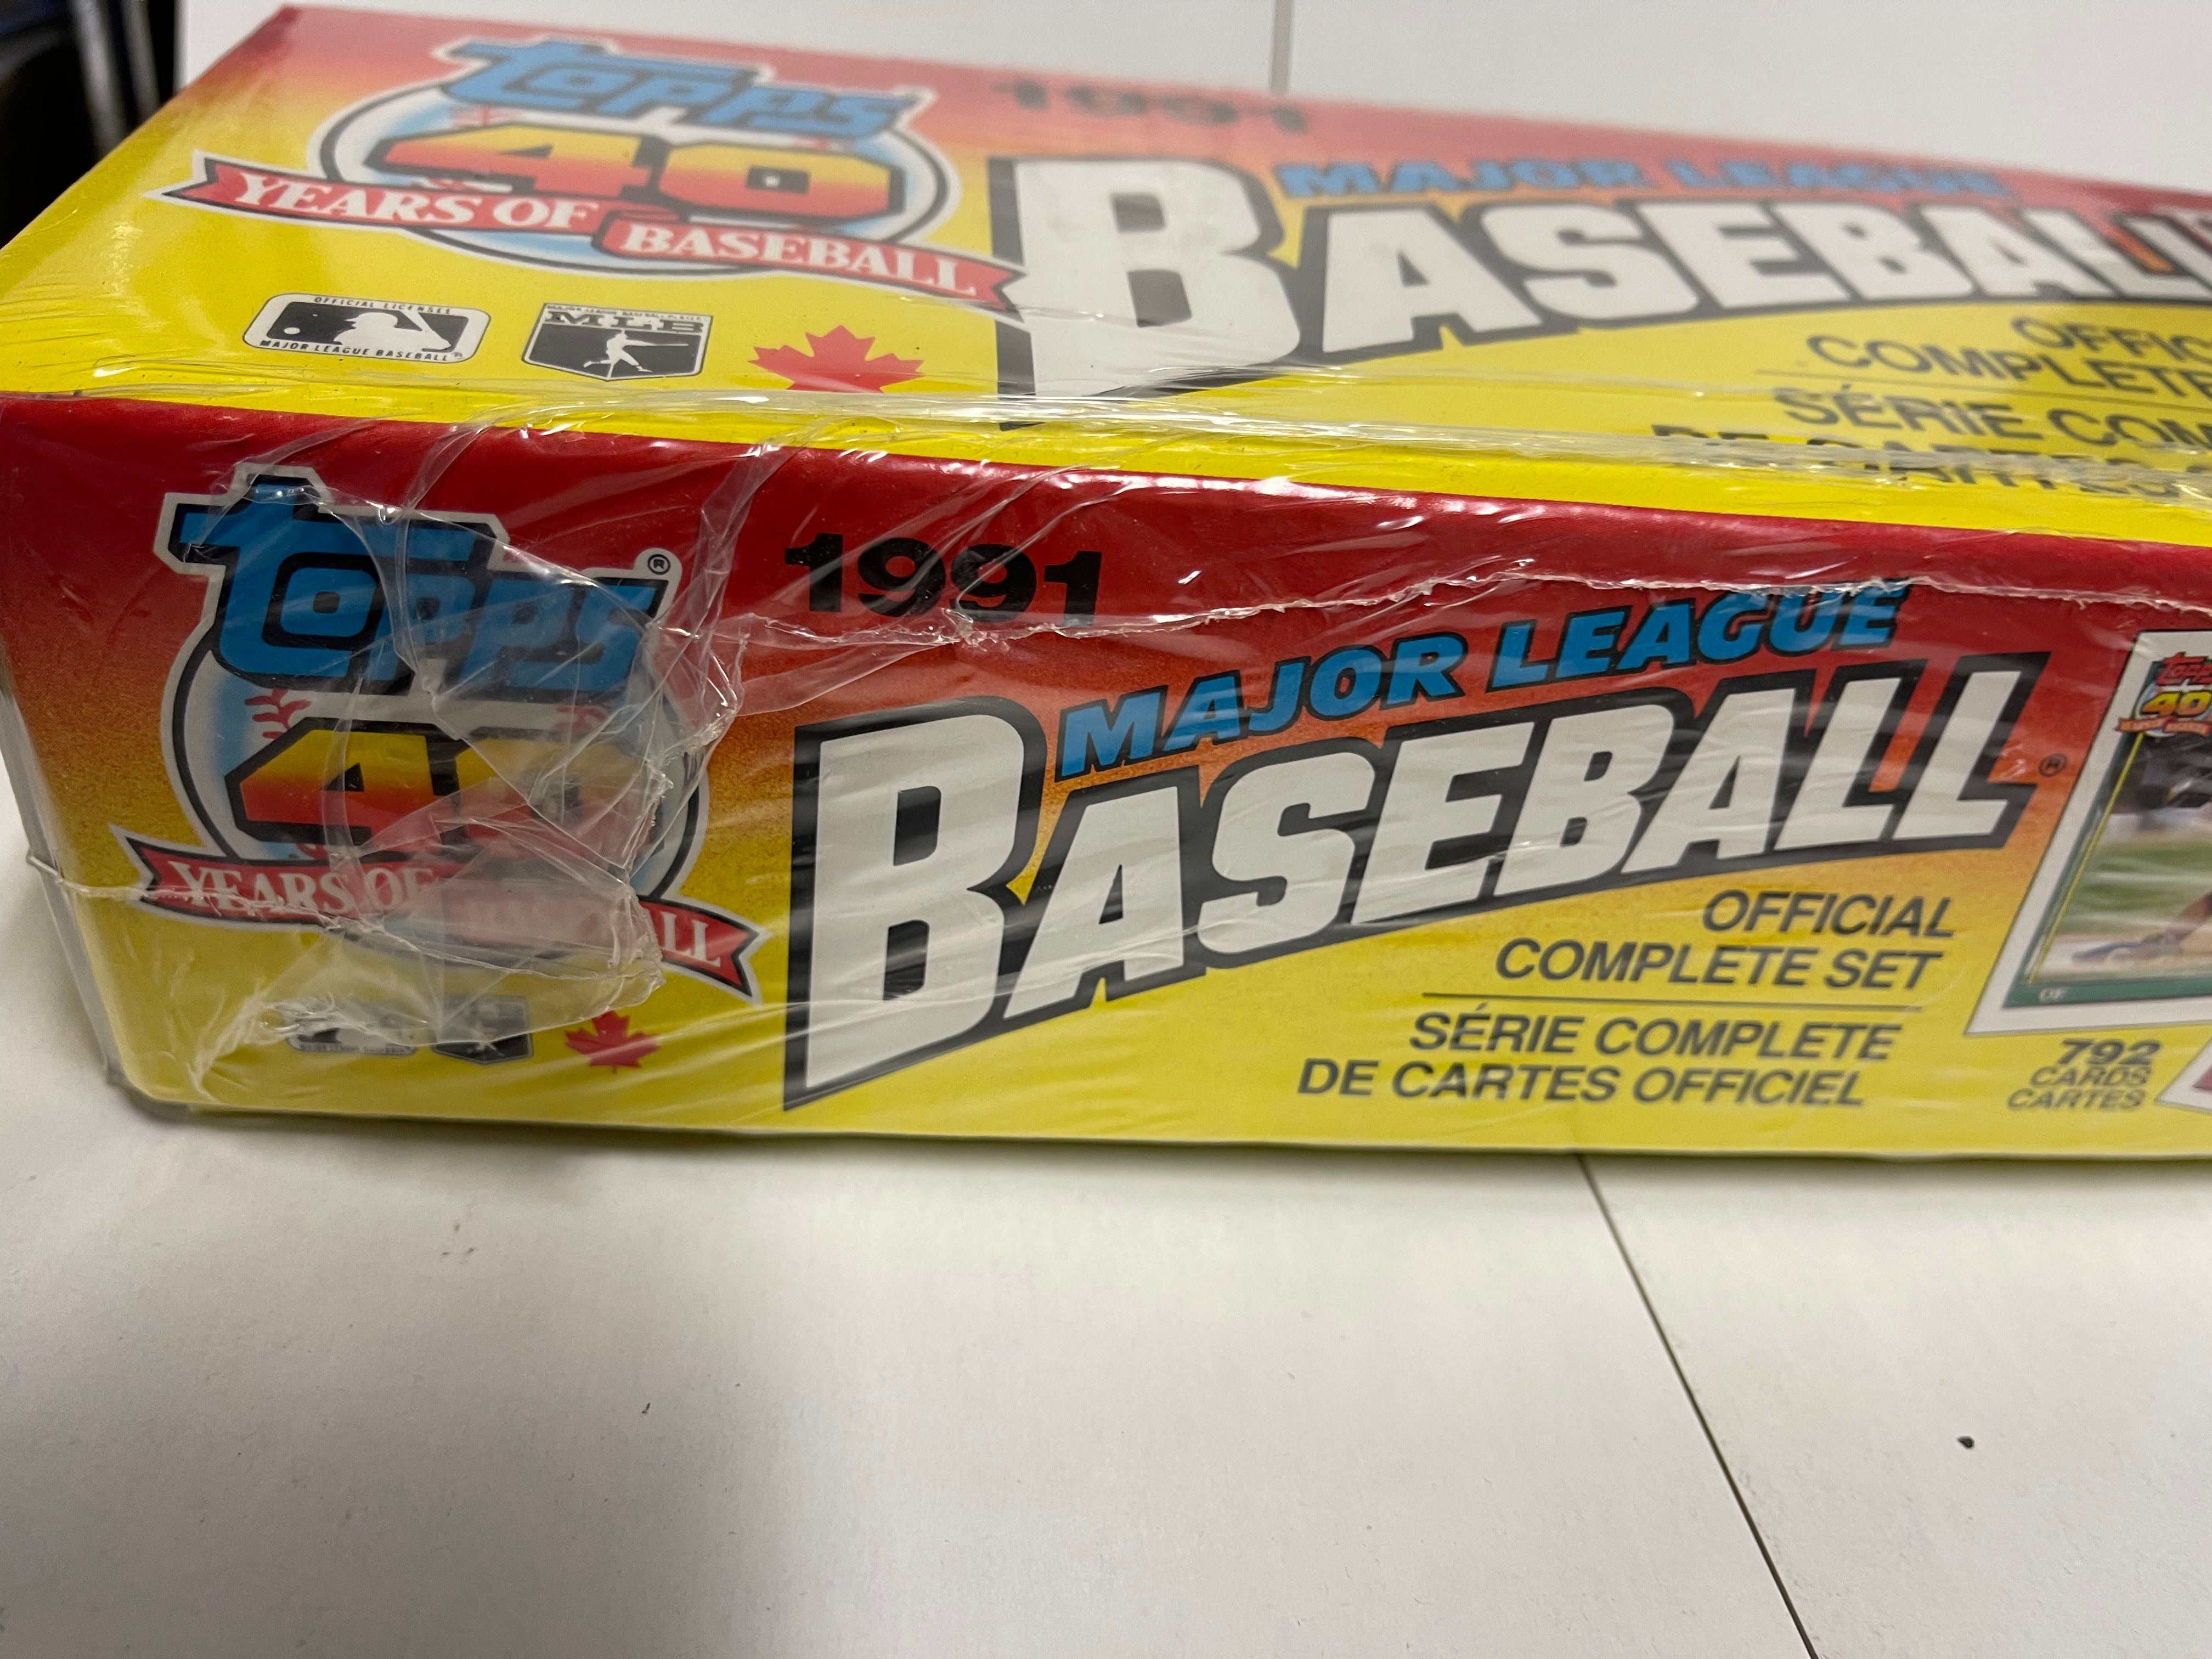 1991 Topps Canadian version rarer O-pee-chee factory sealed baseball cards set